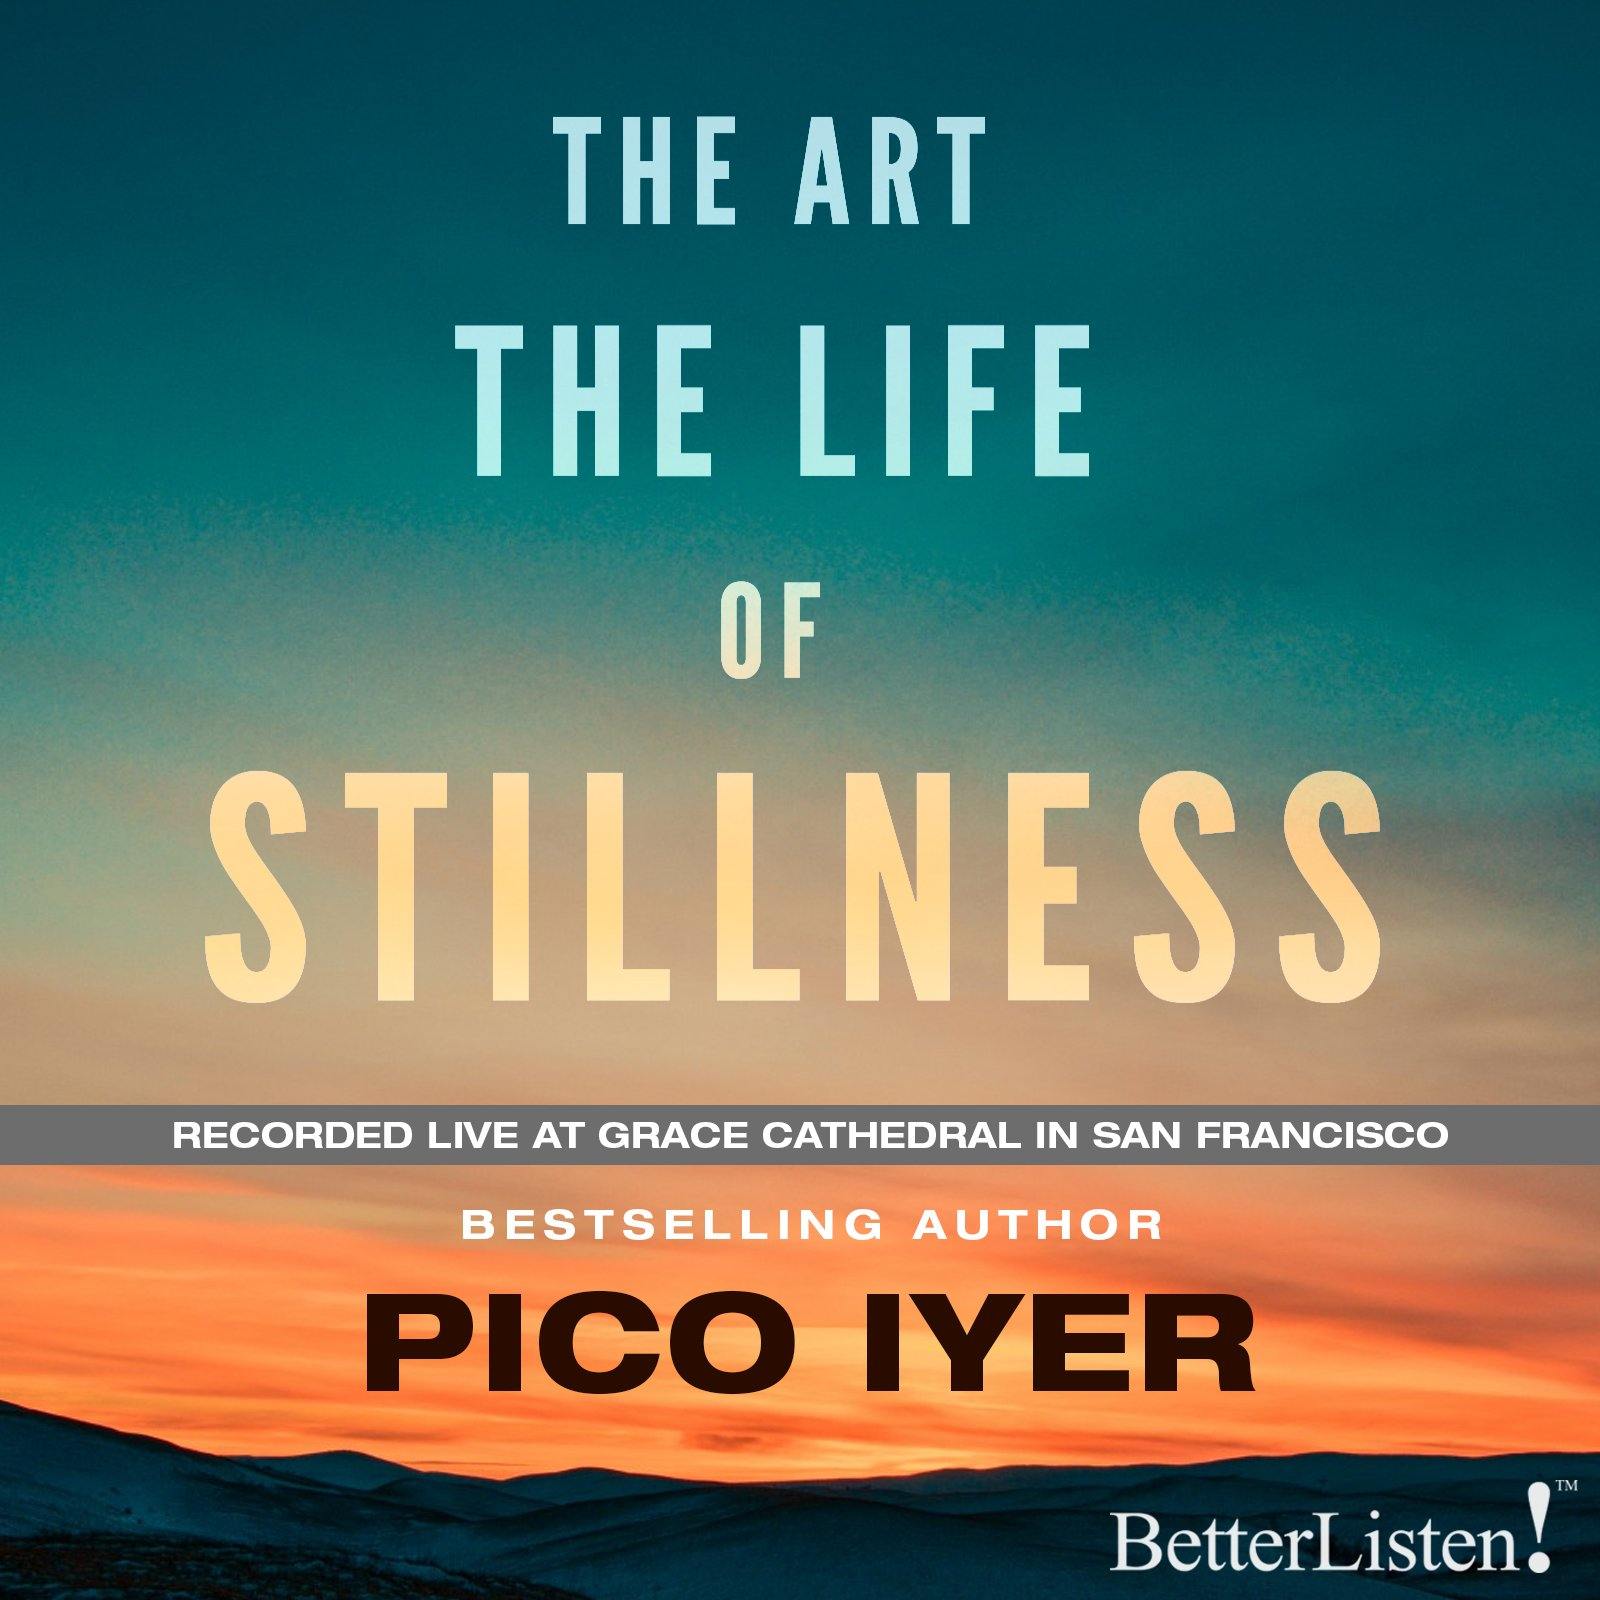 The Art The Life of Stillness by Pico Iyer - Live Recording Audio Program BetterListen! - BetterListen!